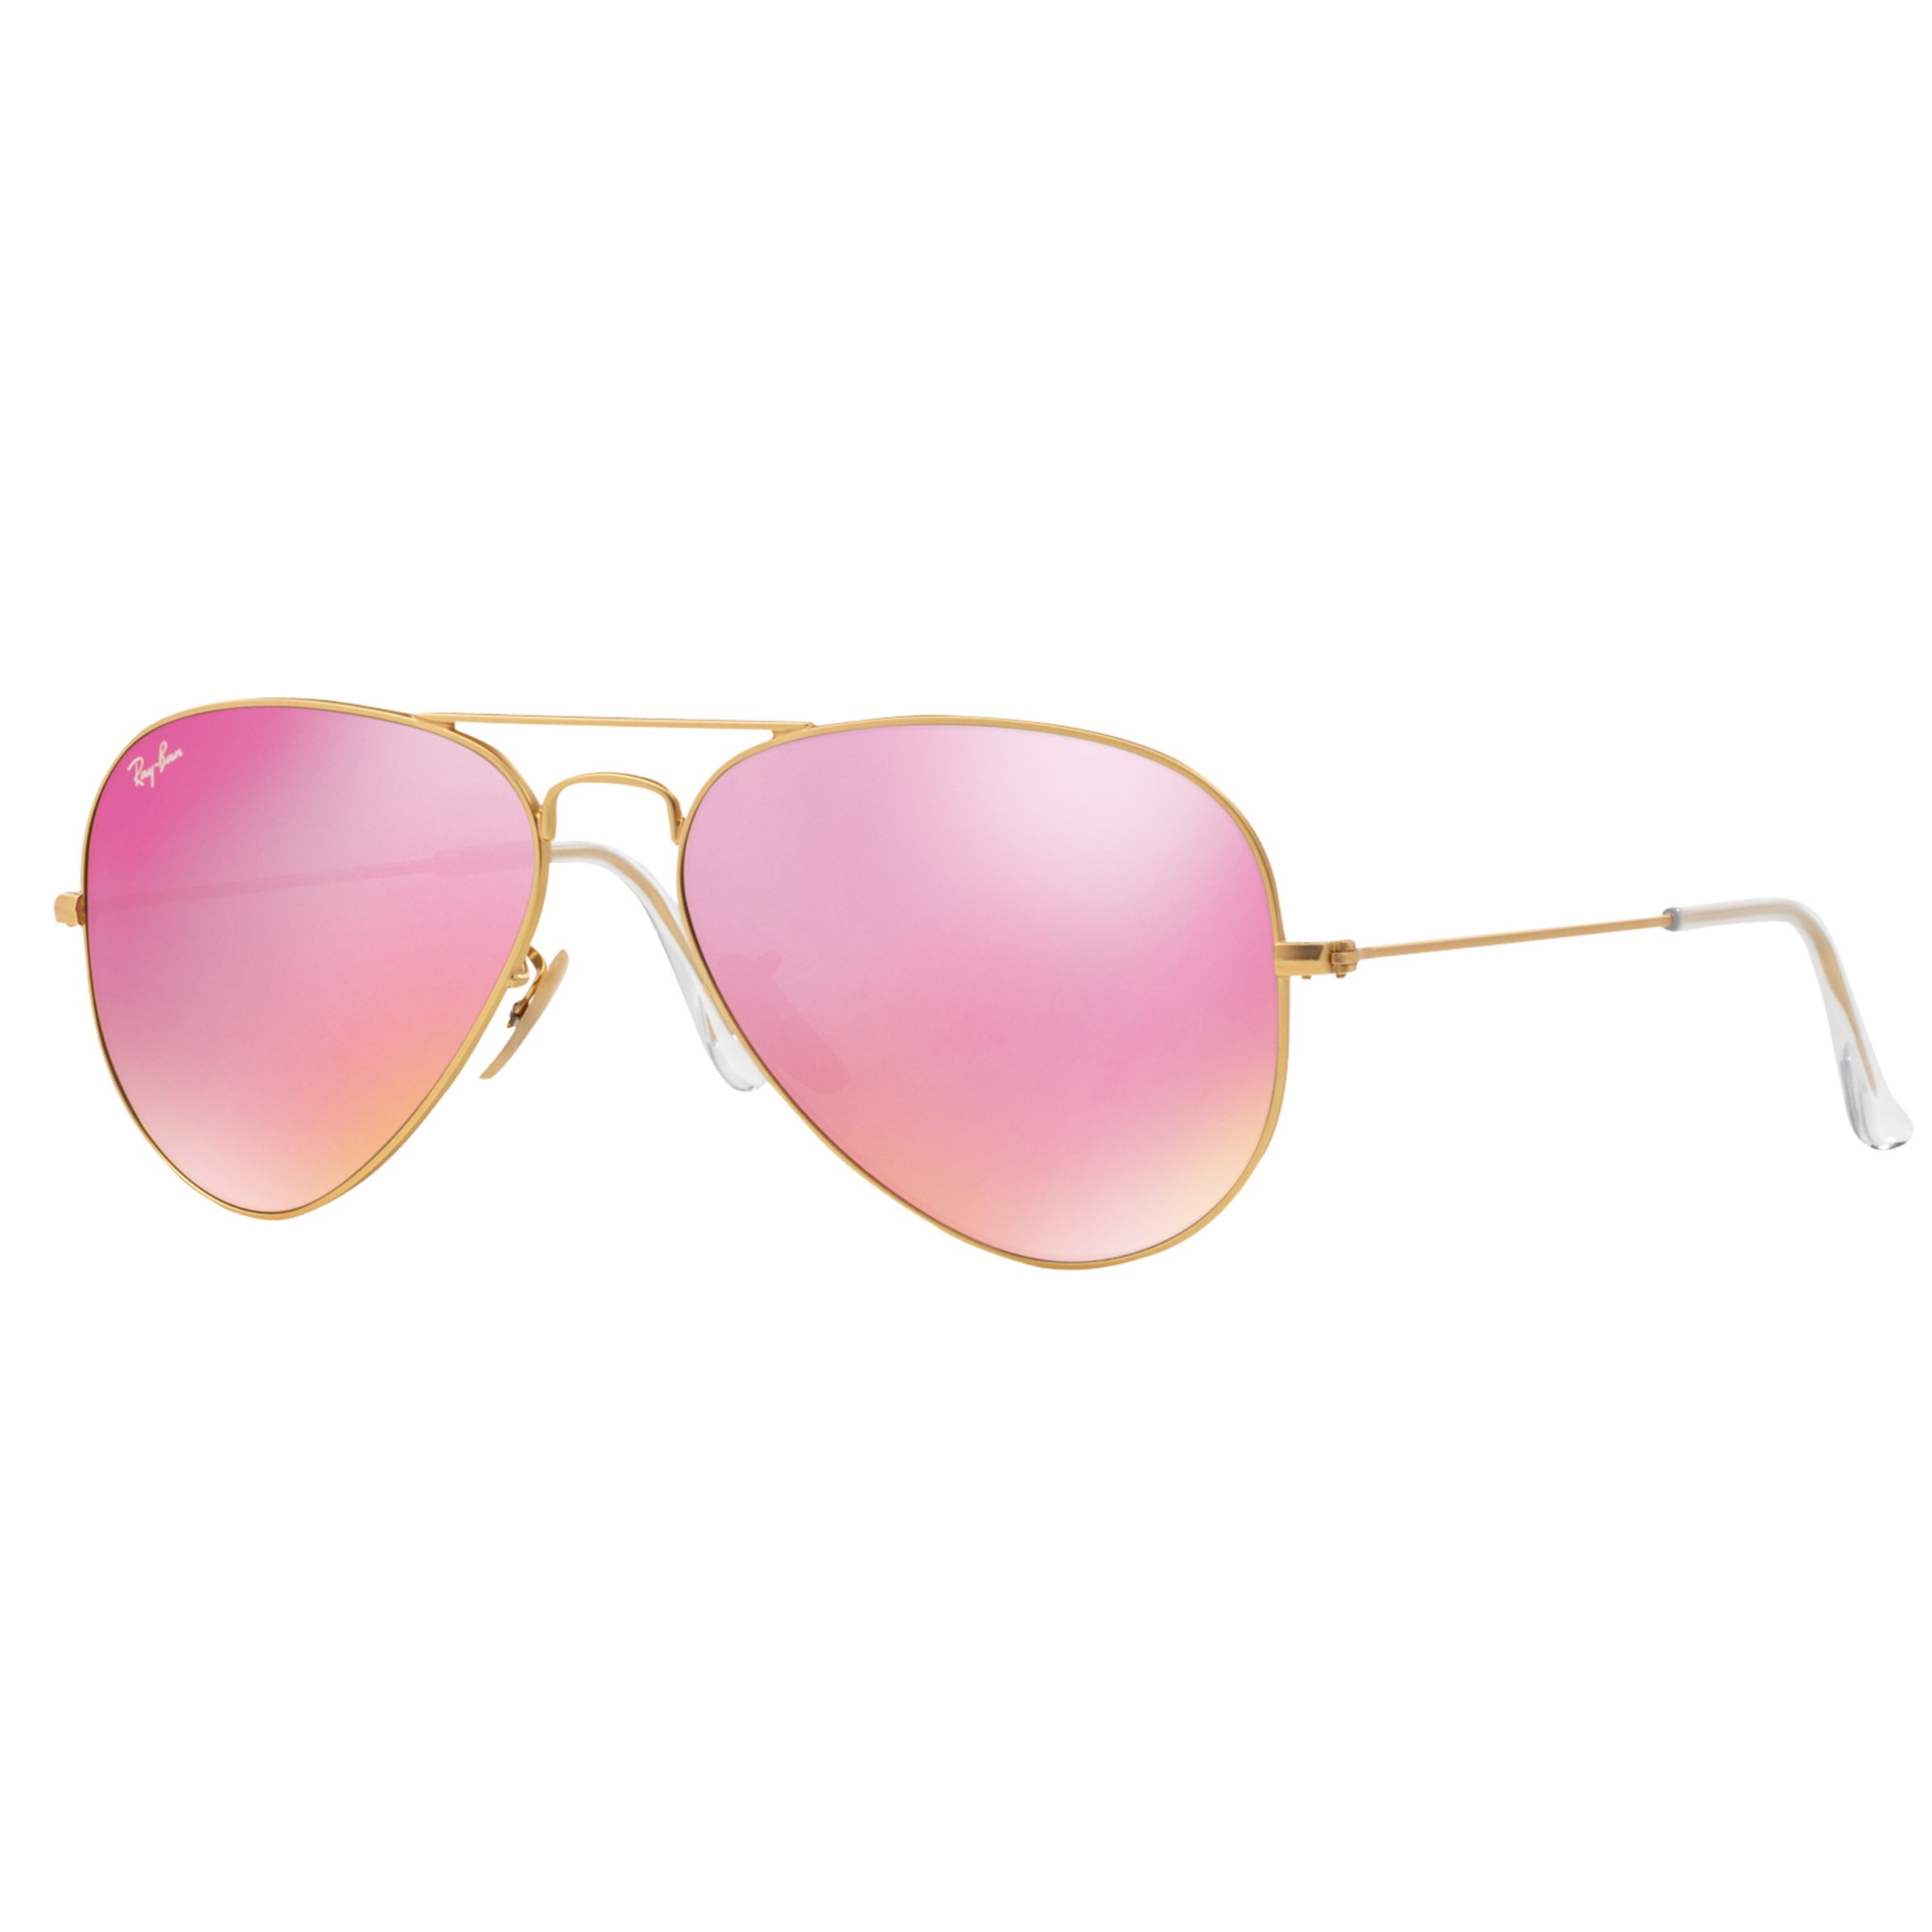 Ray Ban Rb3025 Aviator Sunglasses Gold Pink Mirror At John Lewis Partners